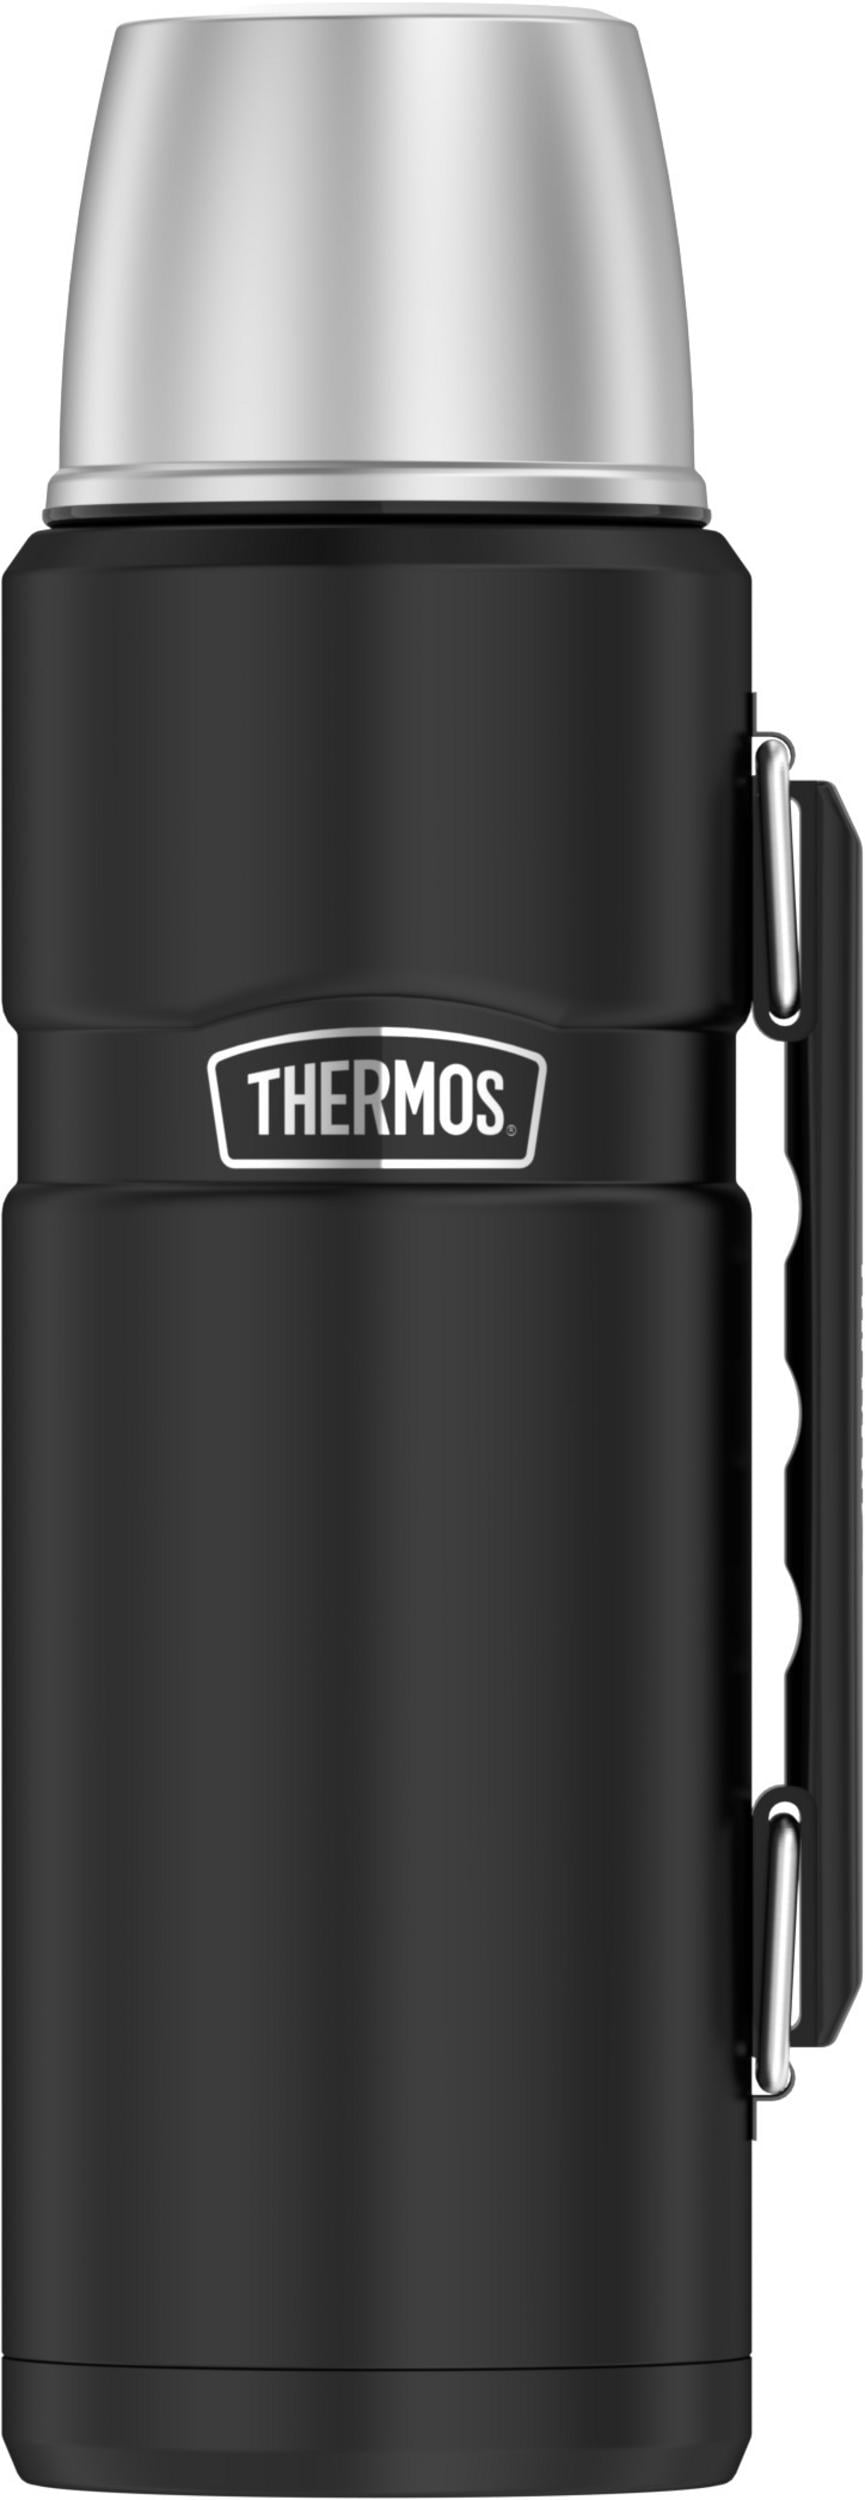 Thermos Stainless King Flask, Matt Black, 1.2 L